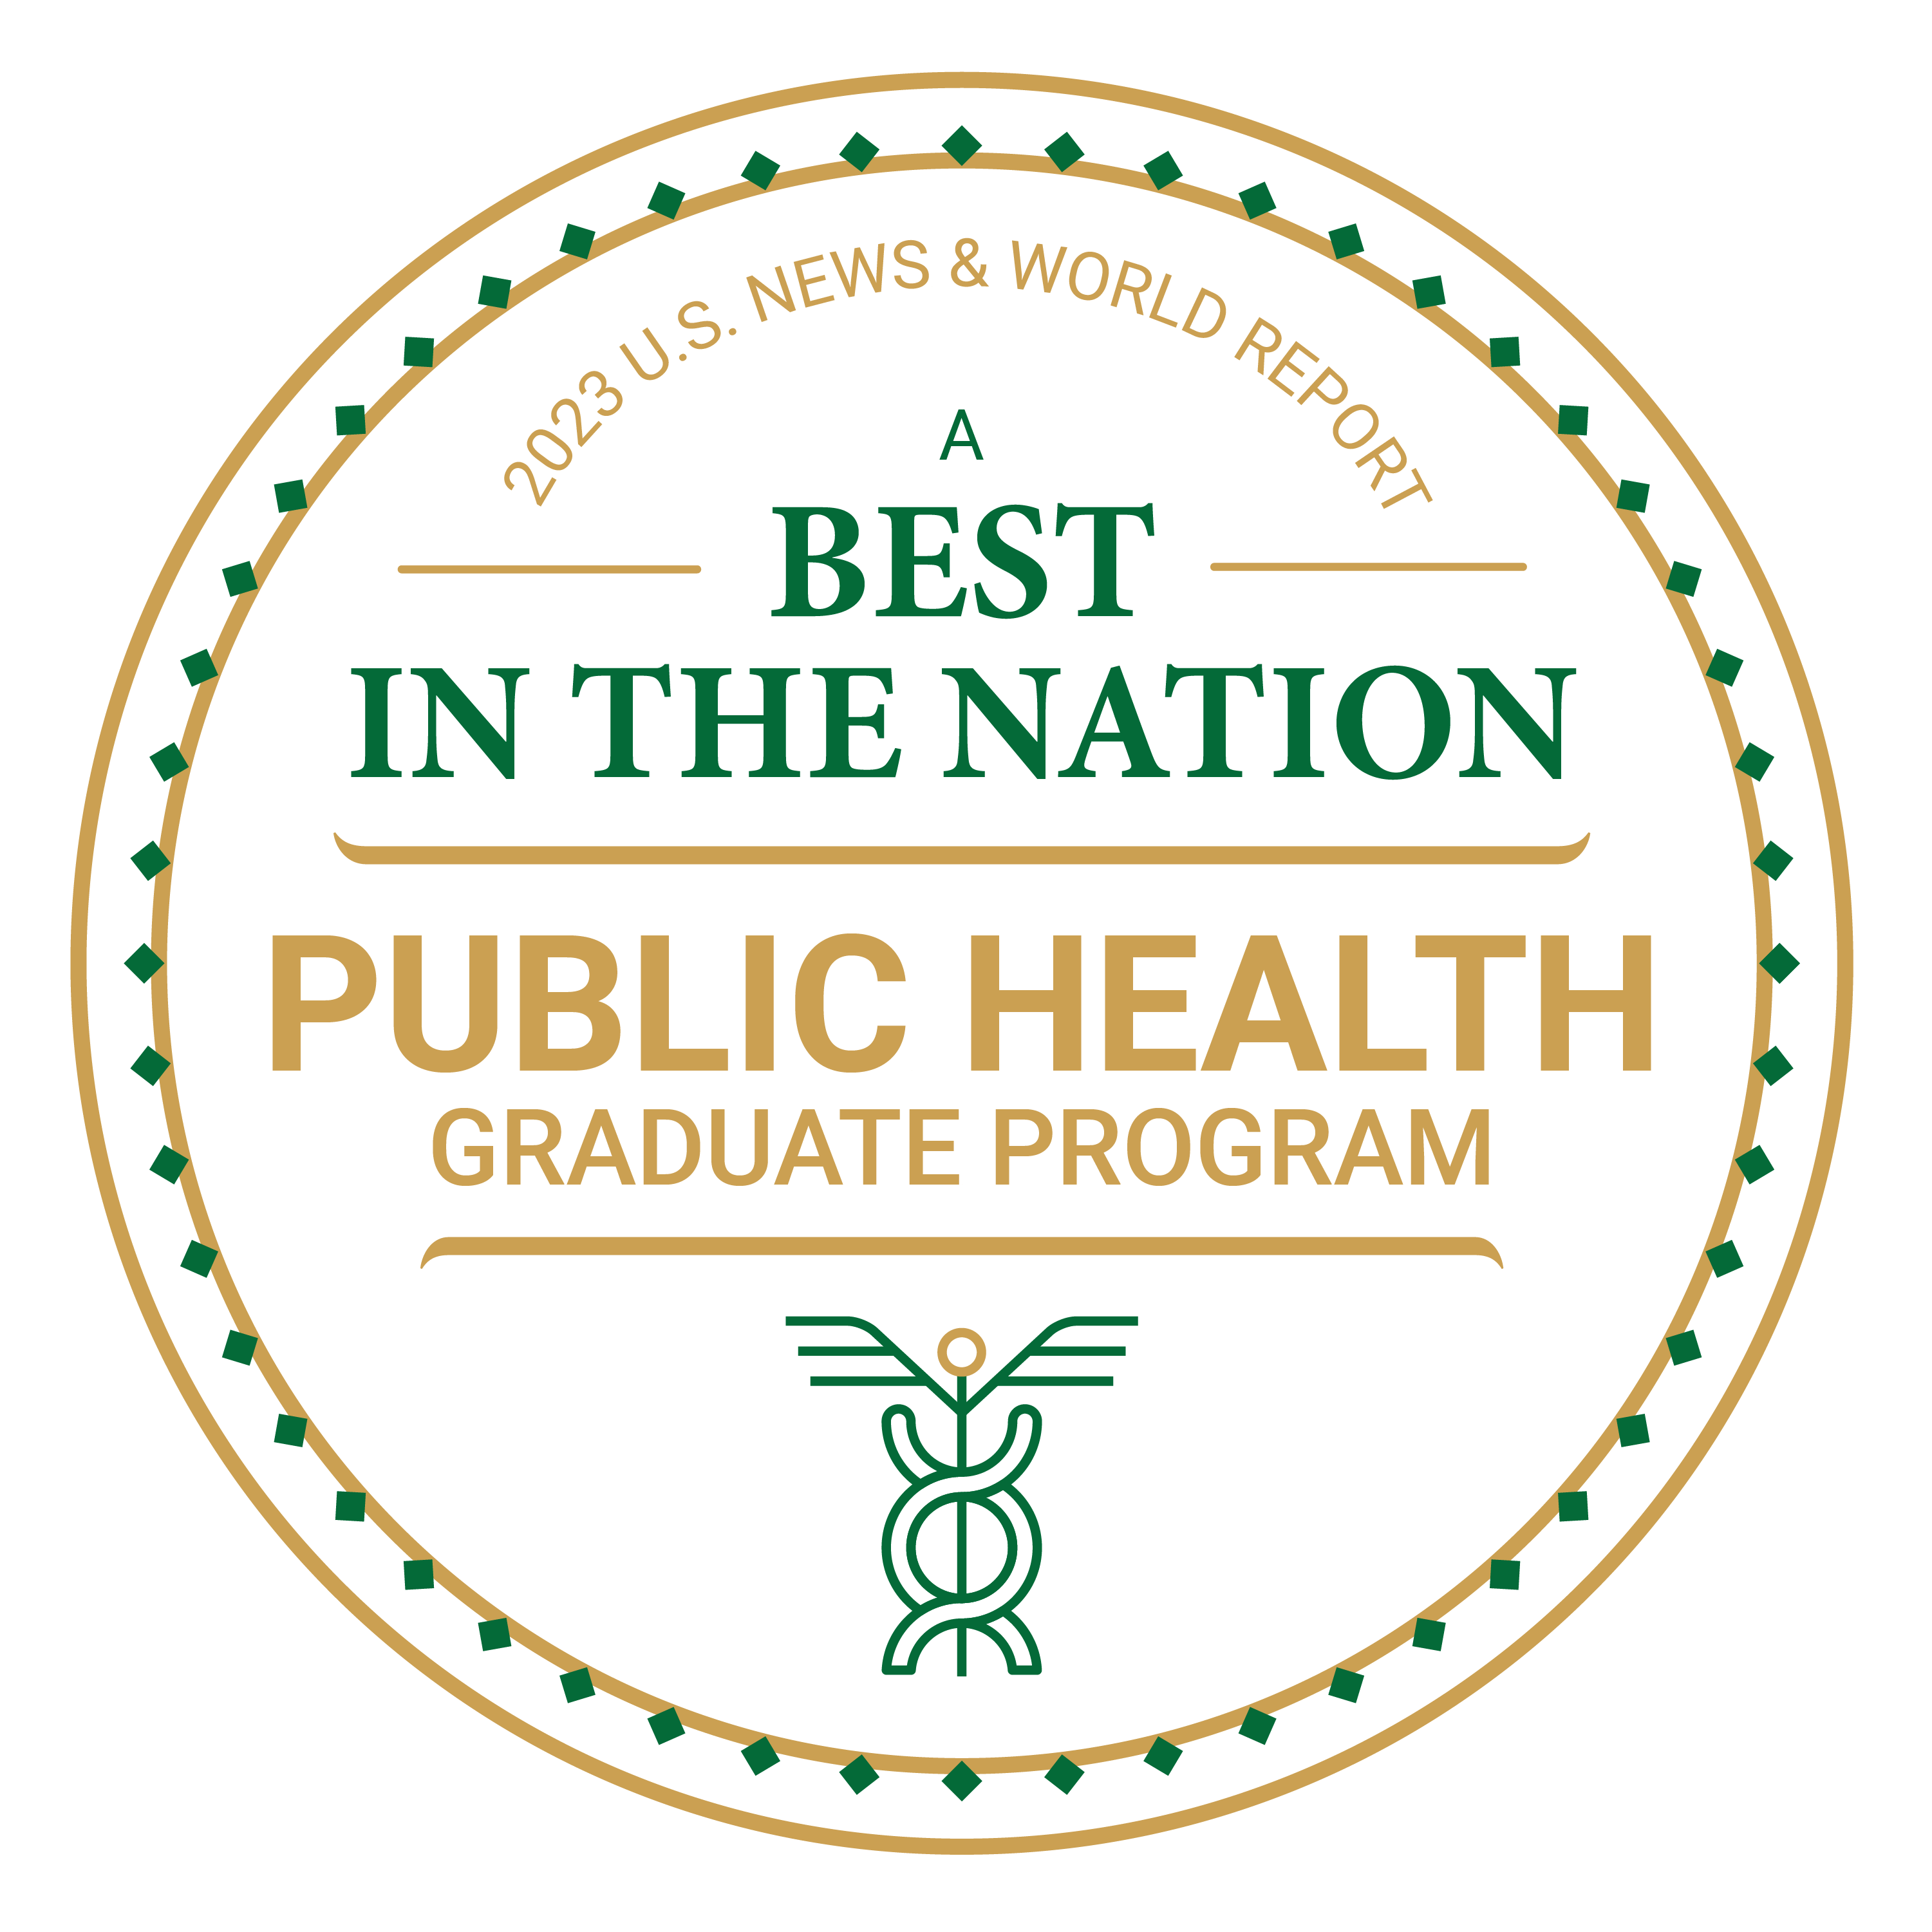 2022 U.S. News & World Report A Best in the Nation Public Health Graduate Program